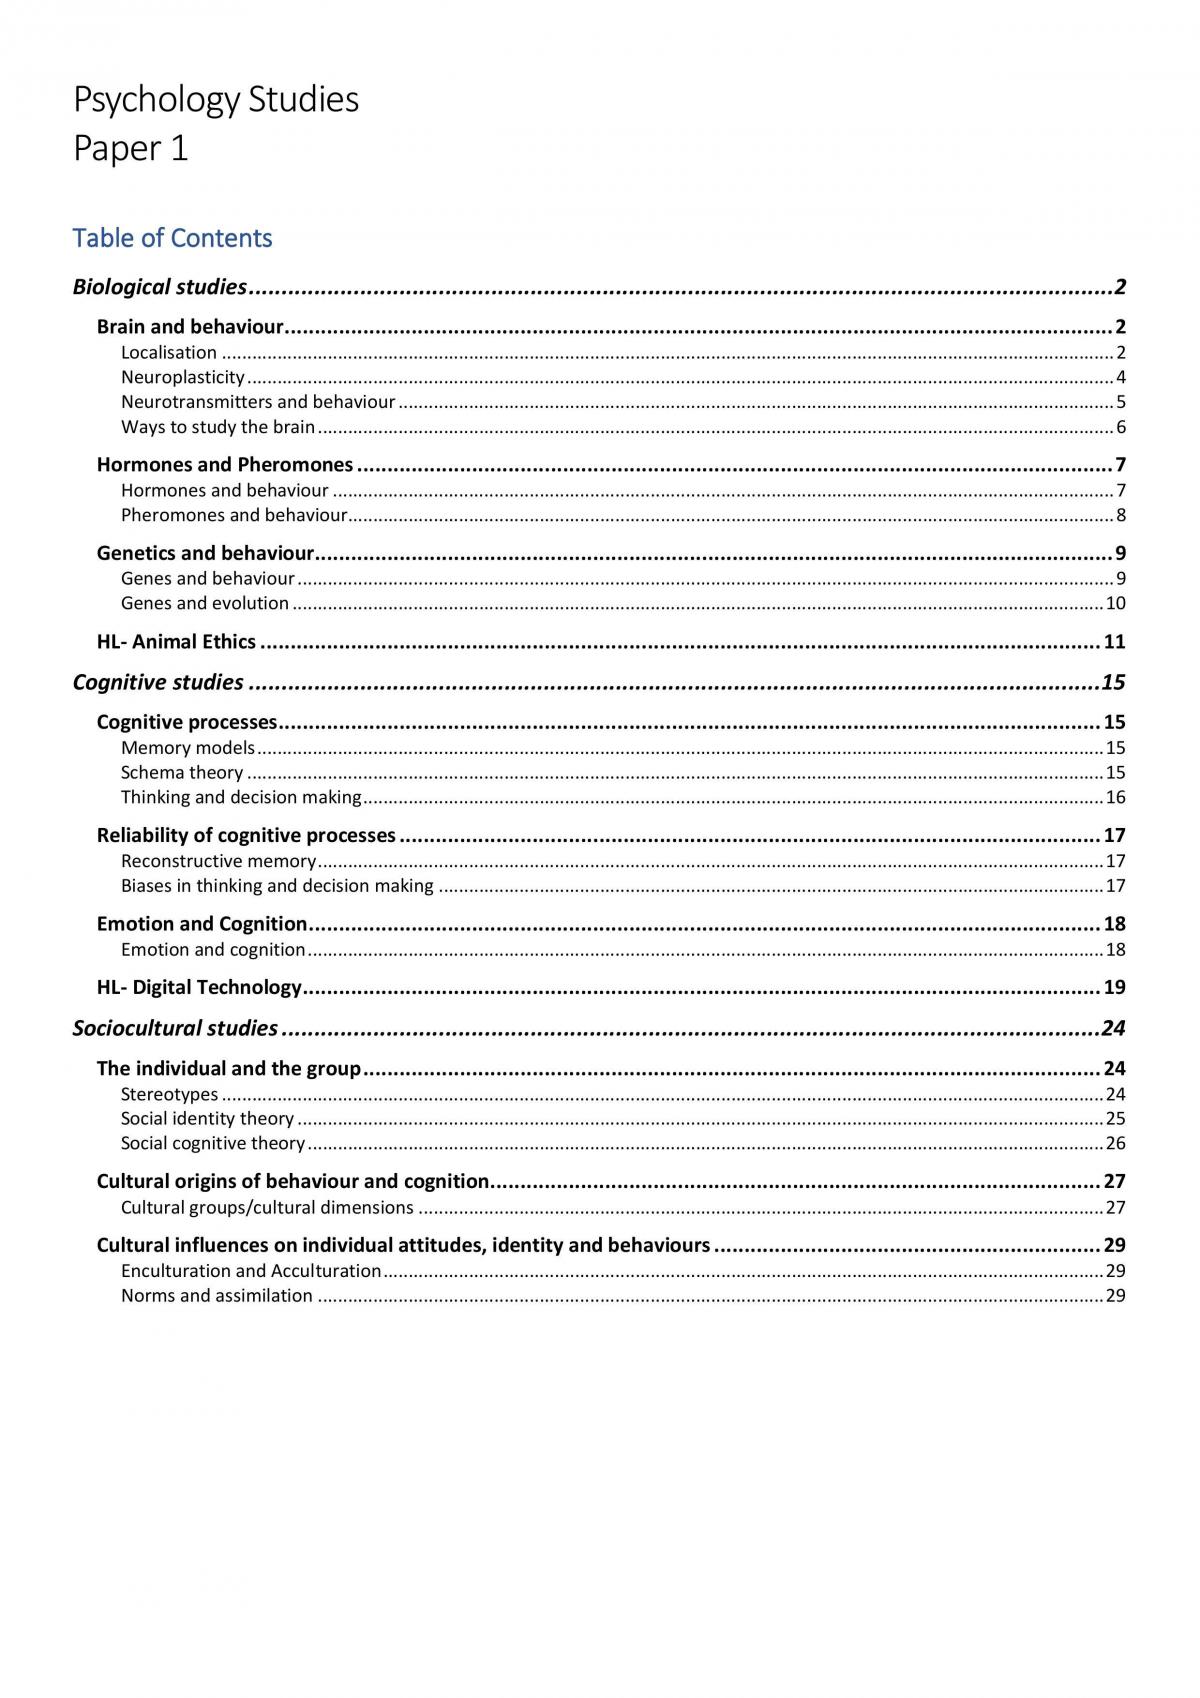 Paper 1, Psychology Studies - Page 1